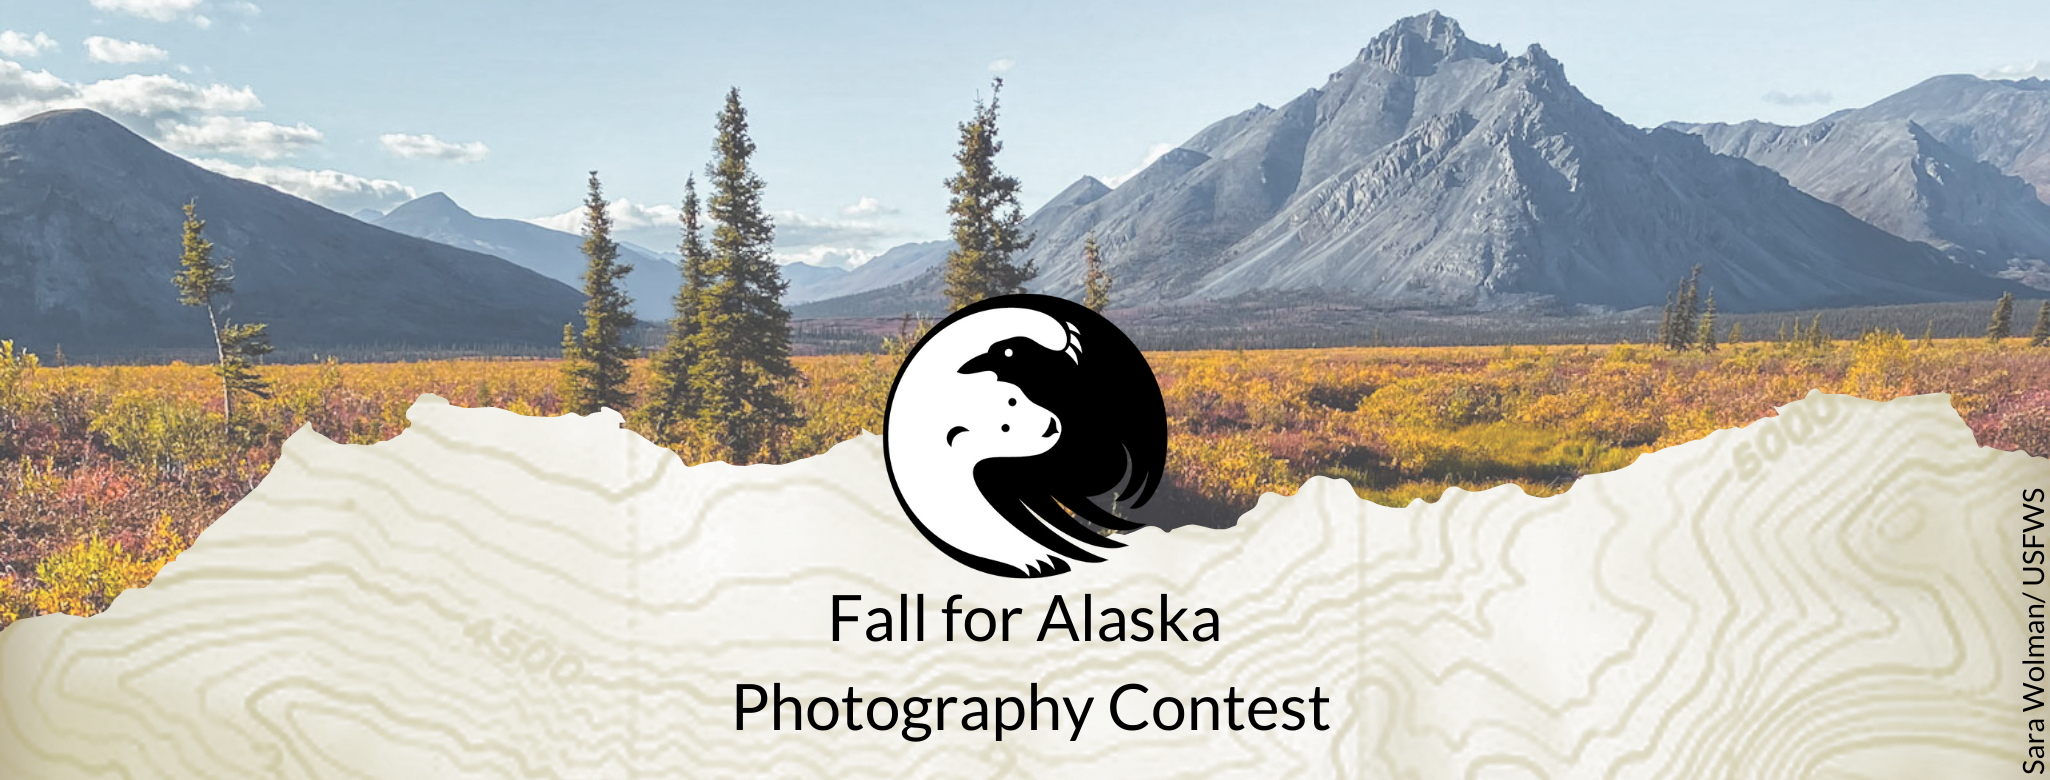 Fall for Alaska Photography Contest